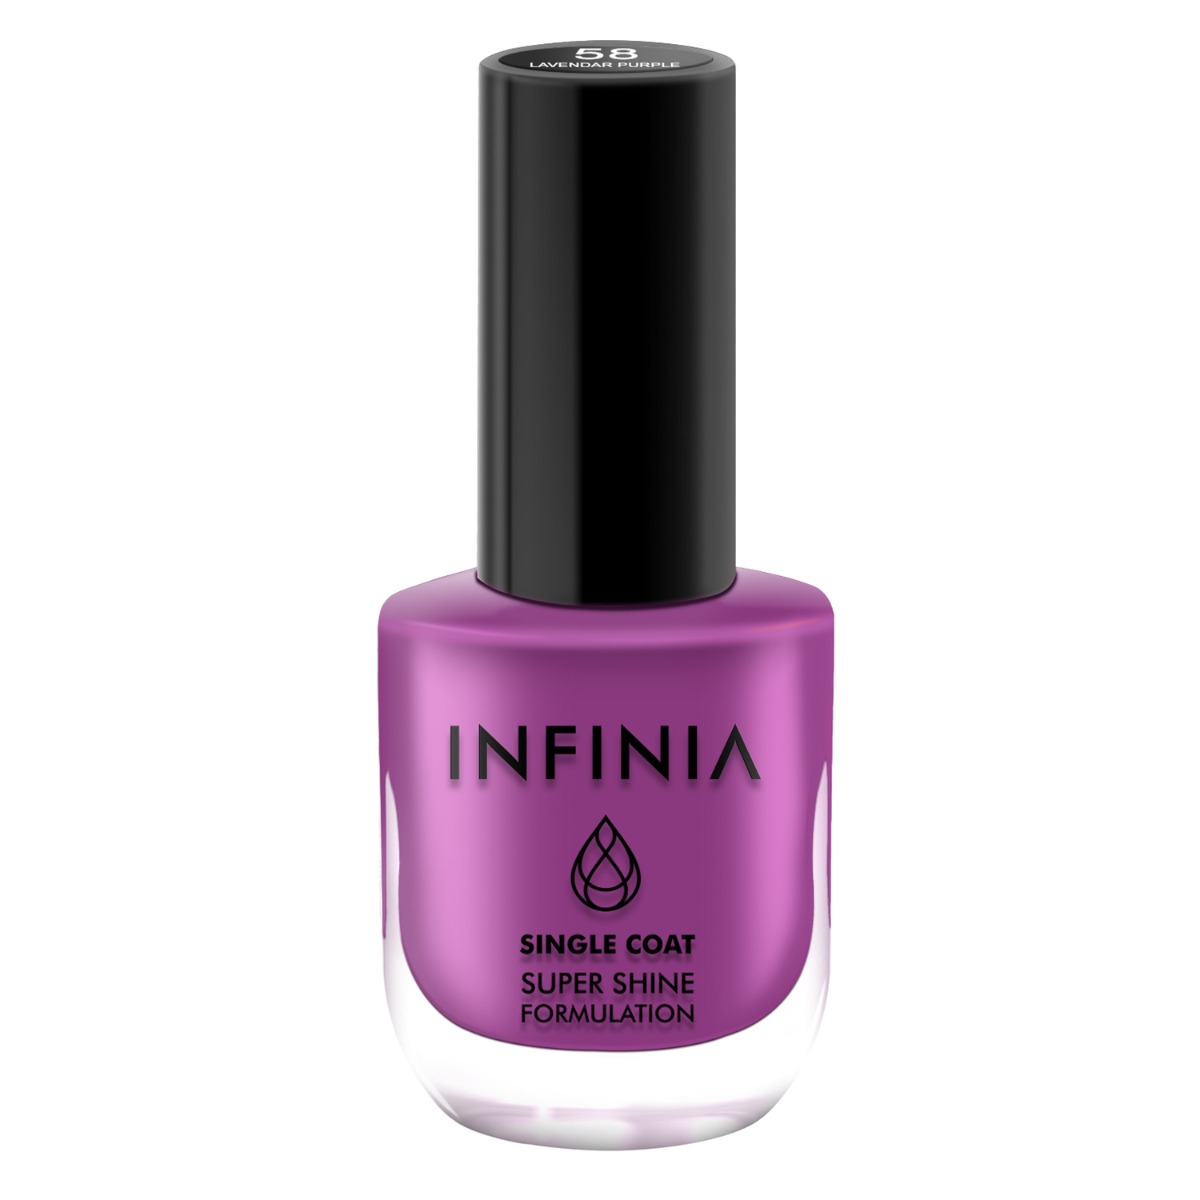 INFINIA Single Coat Super Shine Nail Polish With Ultra High Gloss, 12ml-058 Lavendar Purple